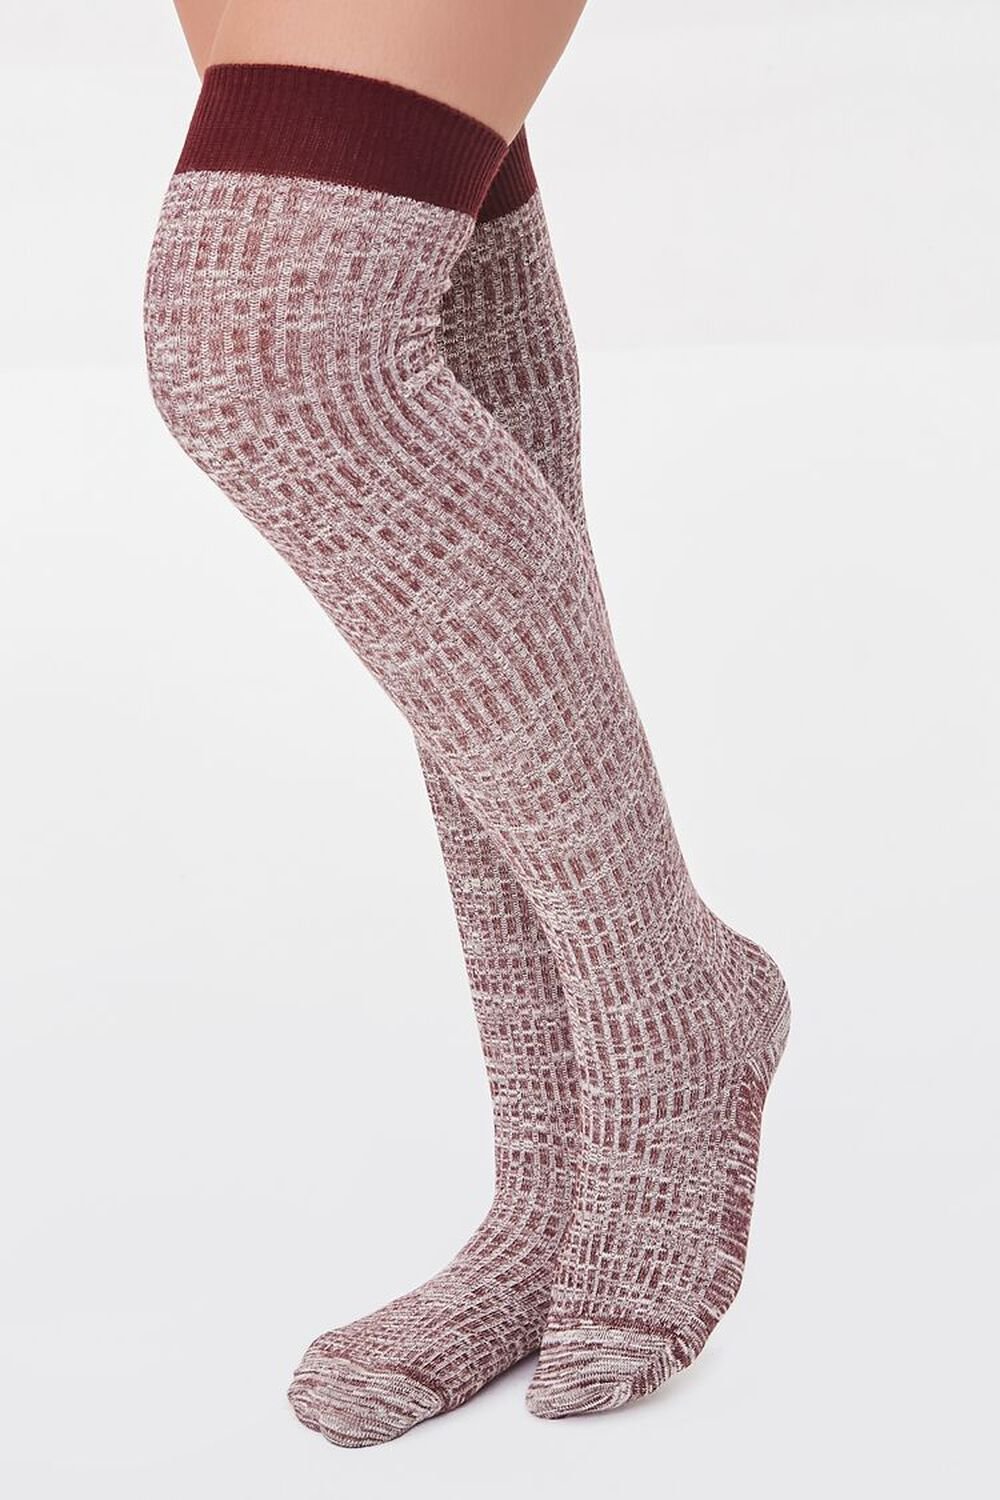 Marled Over-the-Knee Socks, image 1